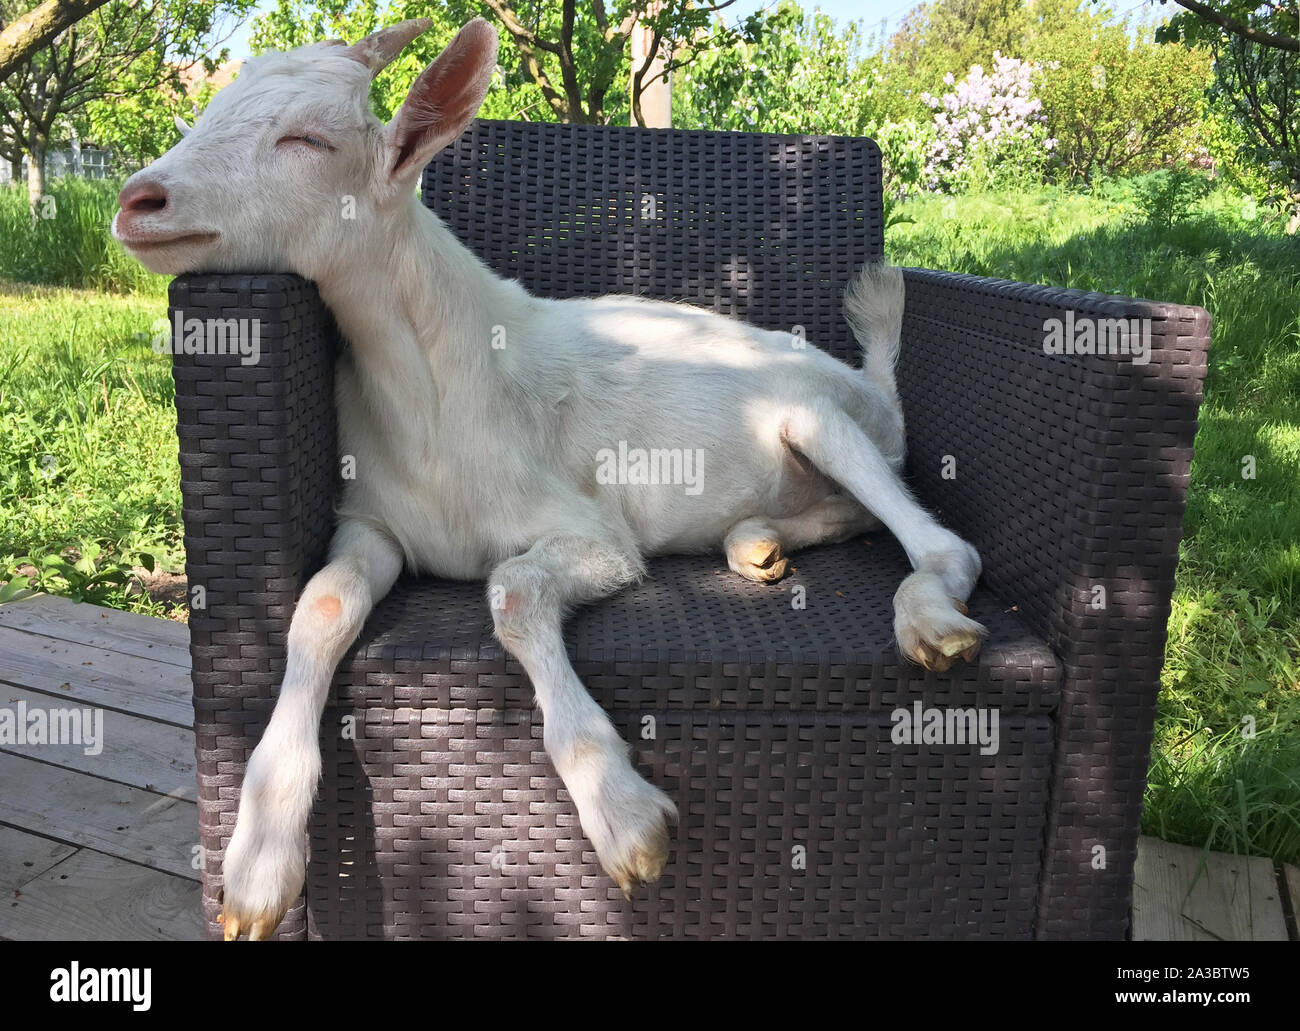 Cute kid goat pet sitting on garden chair Stock Photo